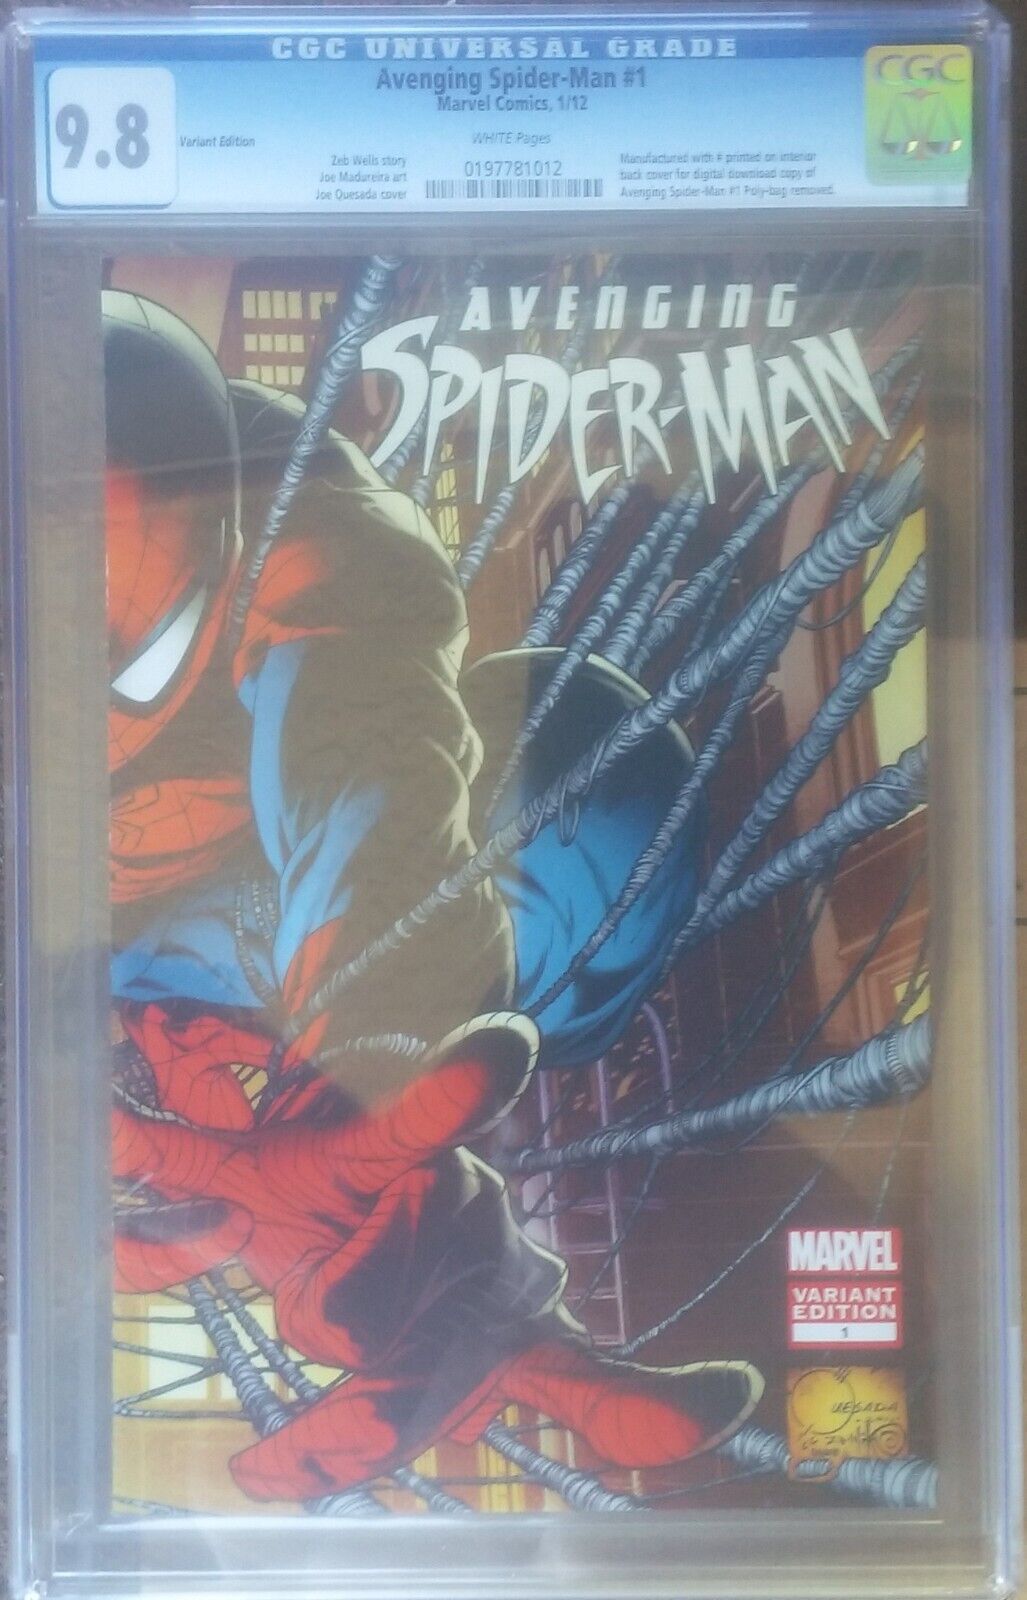 cgc 9.8 Avenging Spider-Man #1 1:50 Variant Joe Quesada cover